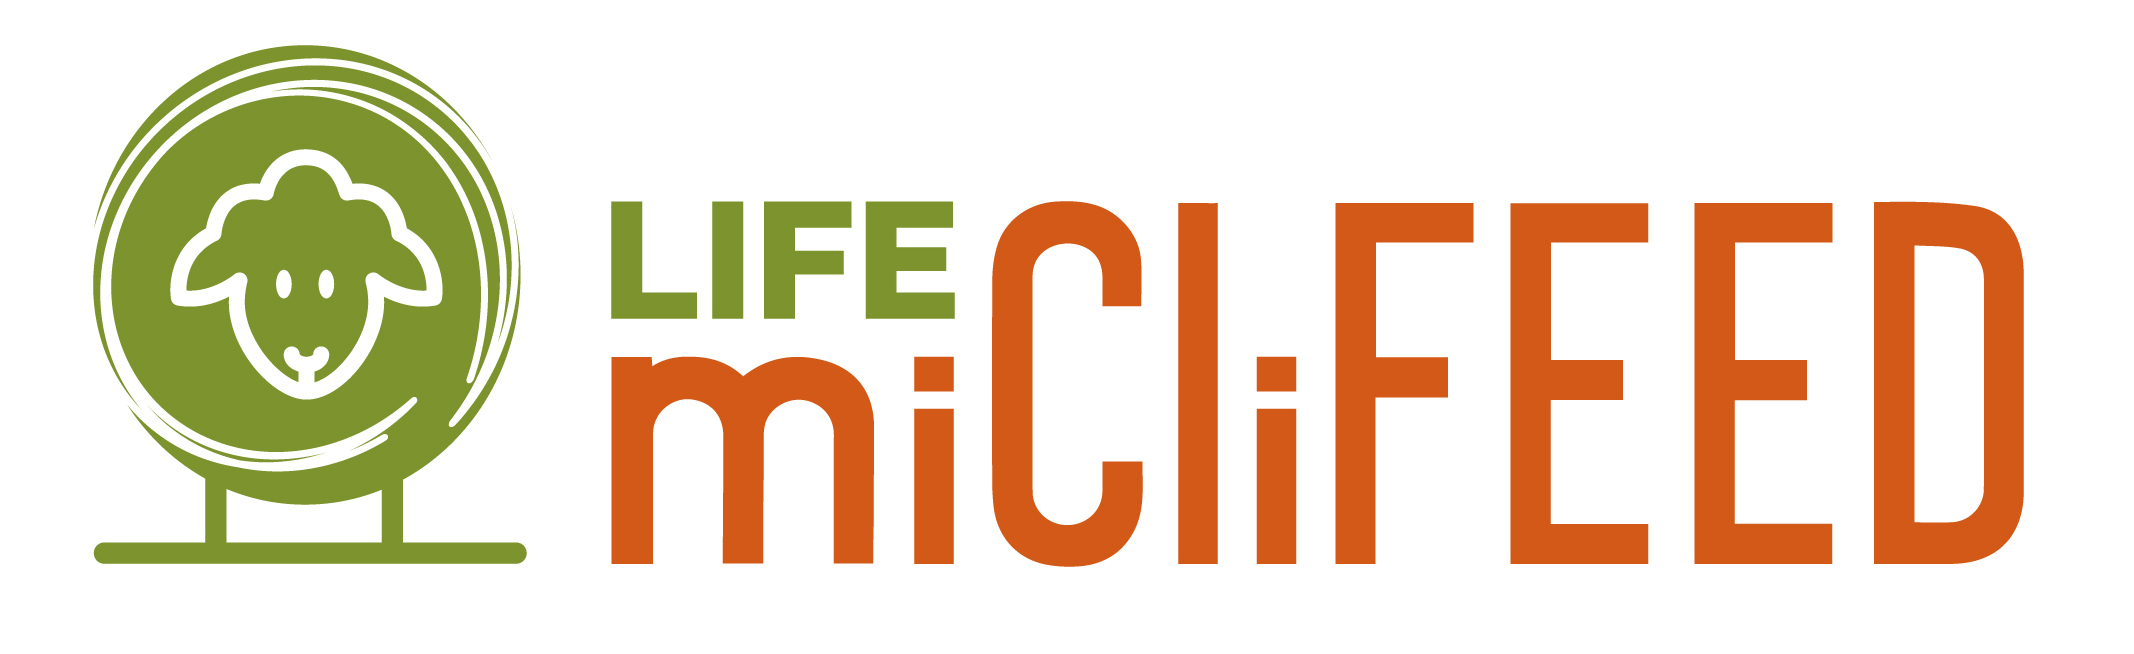 logo lifemiclifeed 